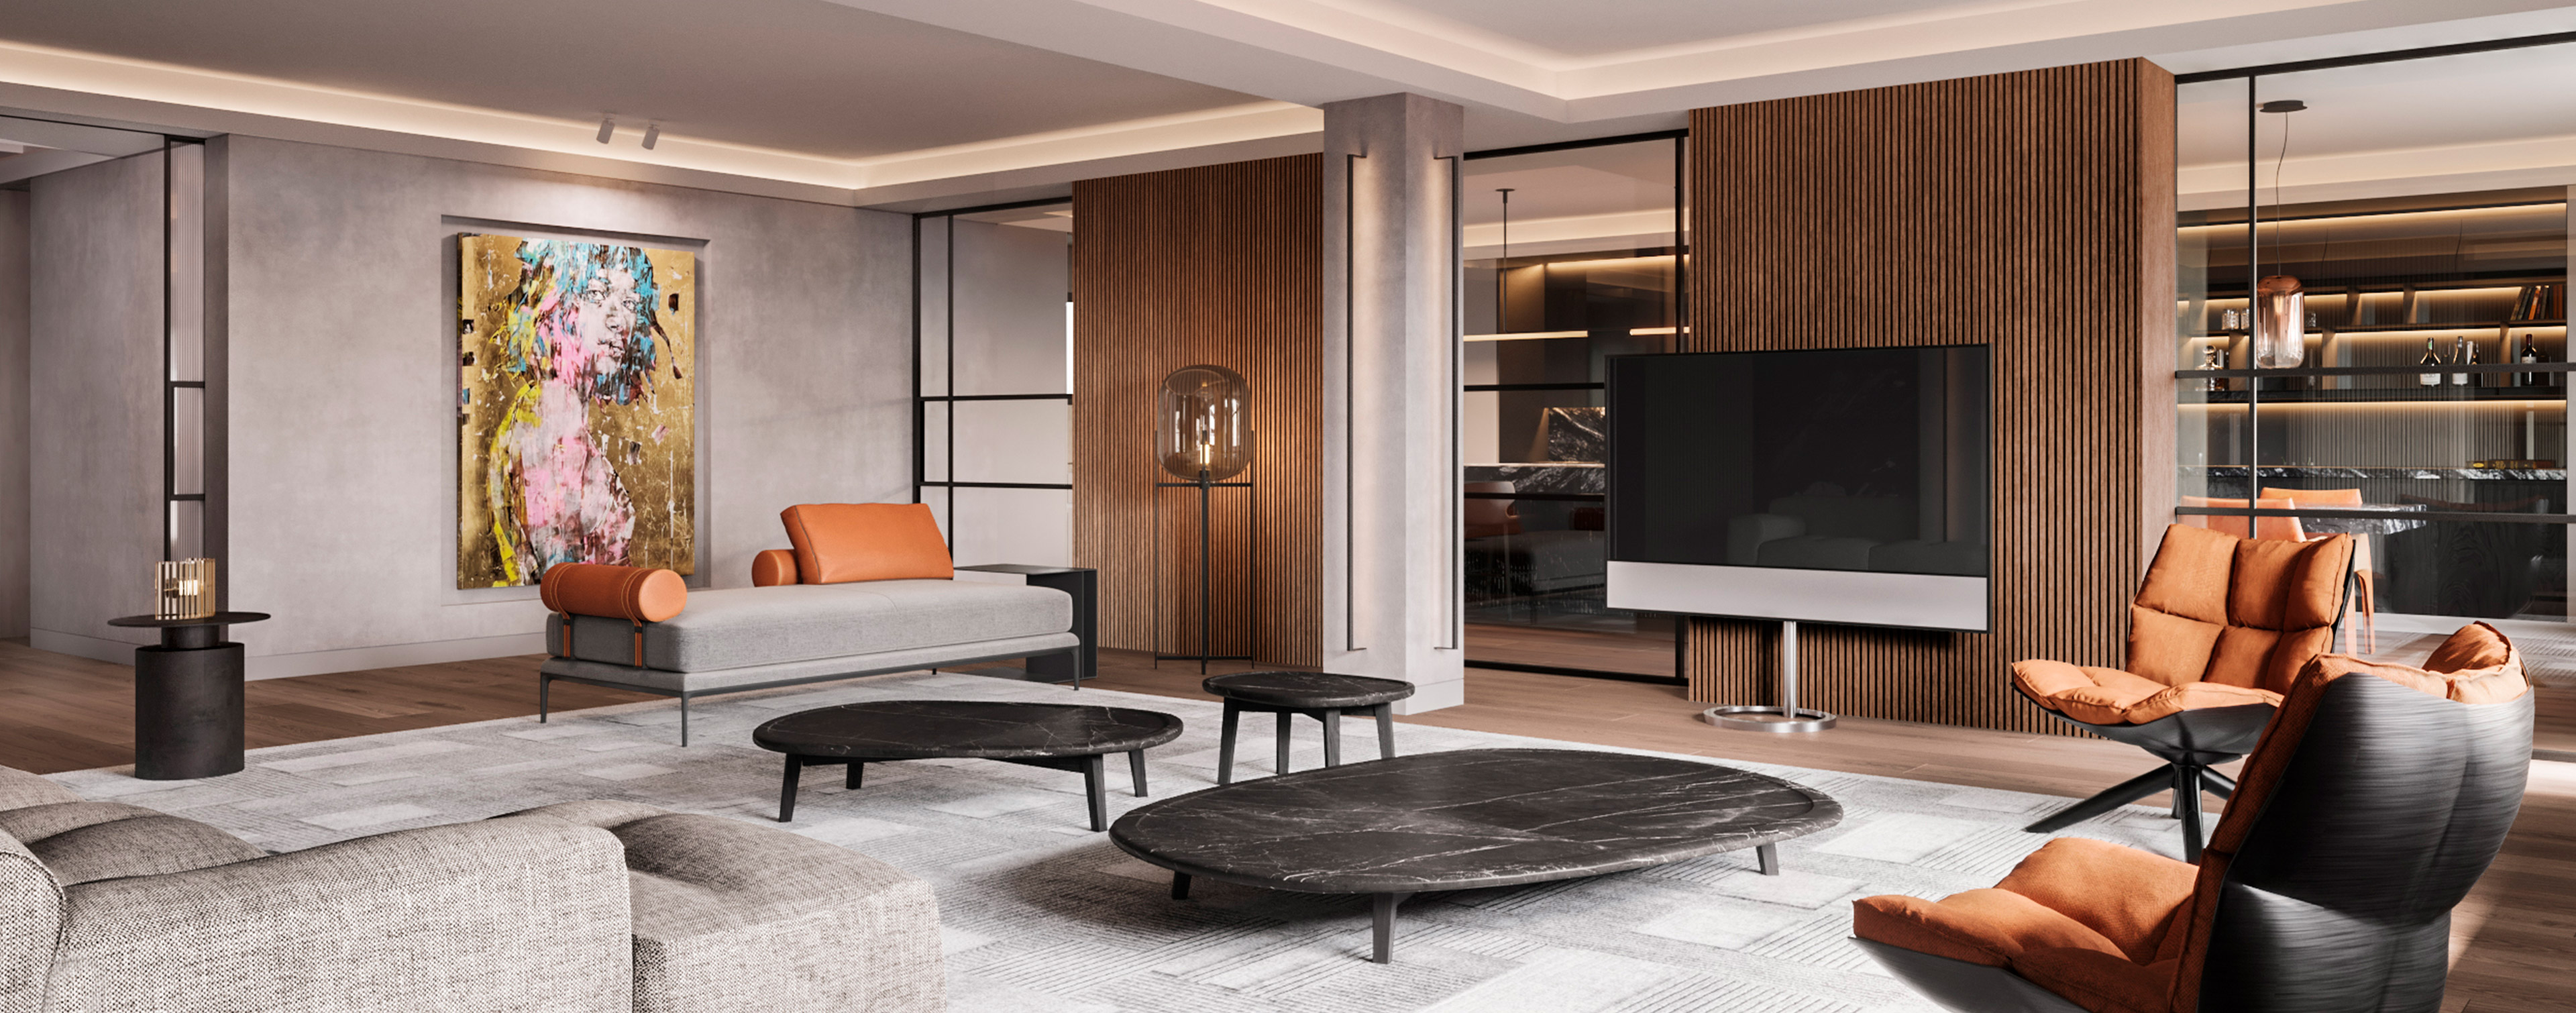 luv studio luxury architects madrid padilla apartment IMG 01 - LUV Studio - Architecture et design - Barcelone